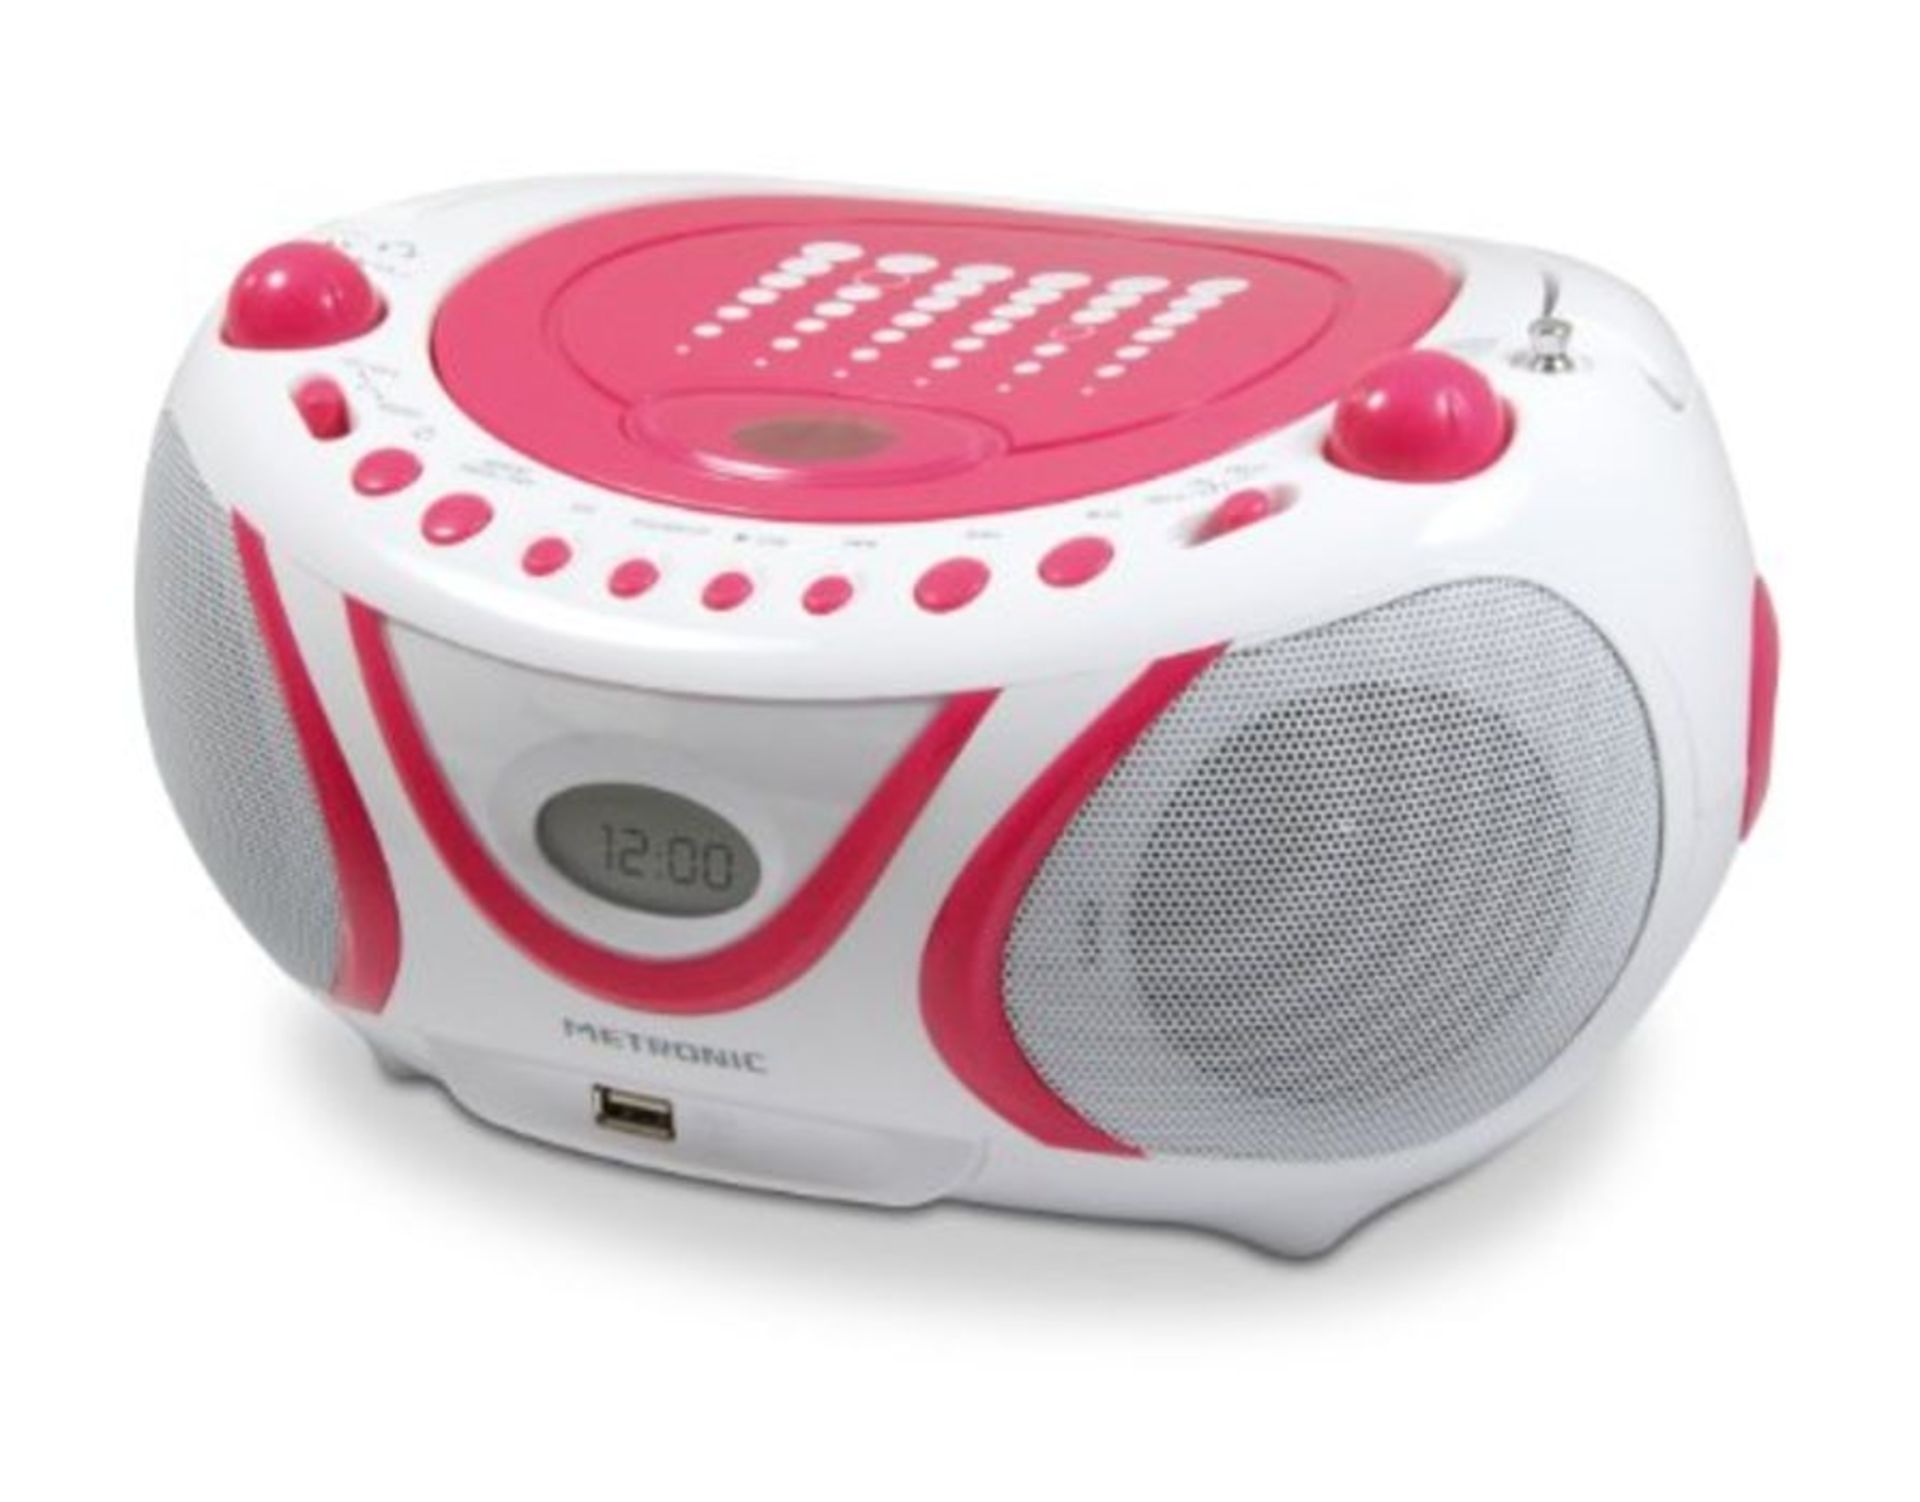 Metronic 477109 Radio / Lecteur CD / MP3 Portable Pop Pink avec Port USB - Rose et Bla